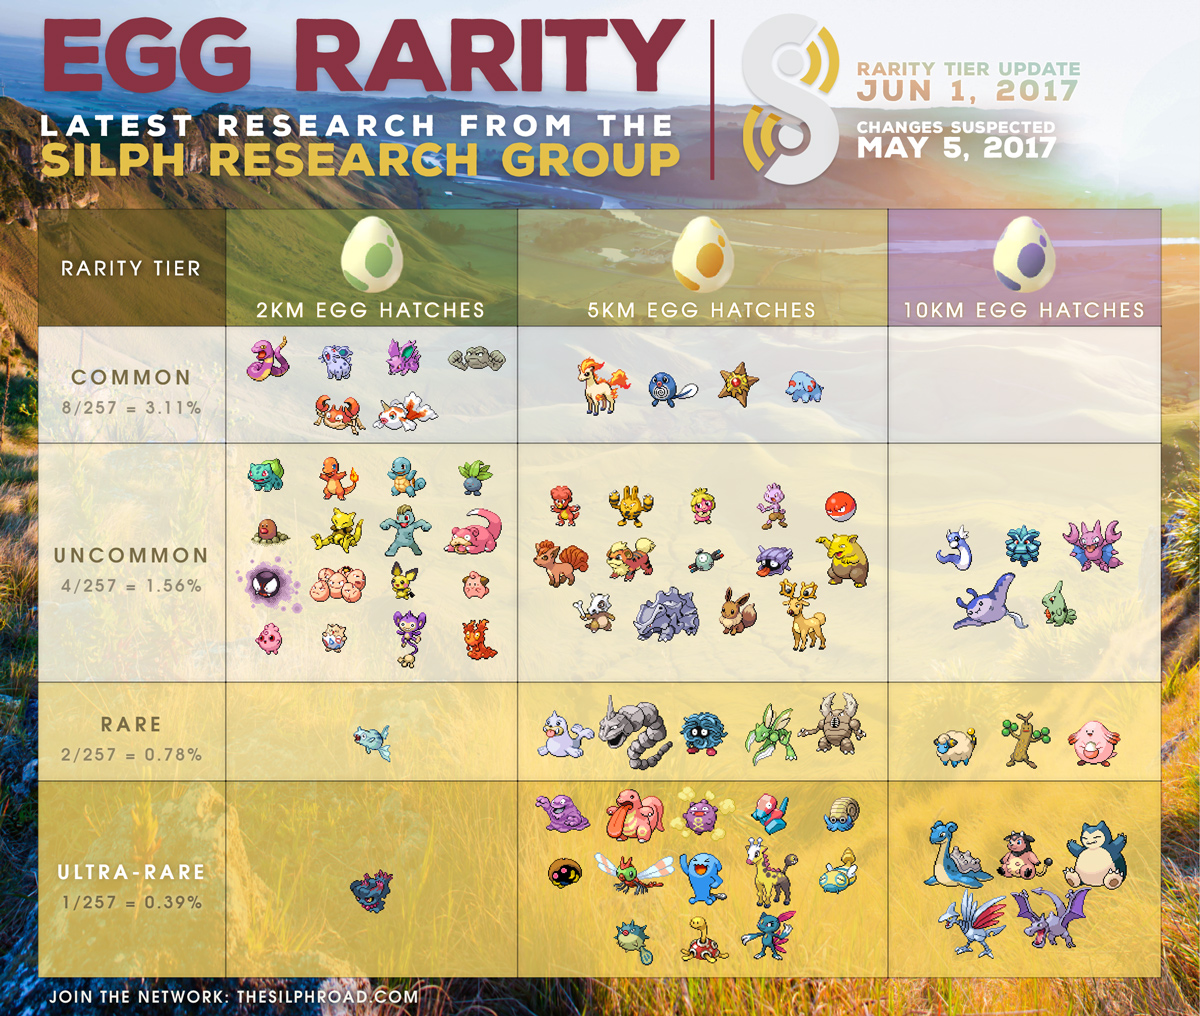 10k Egg Chart Pokemon Go